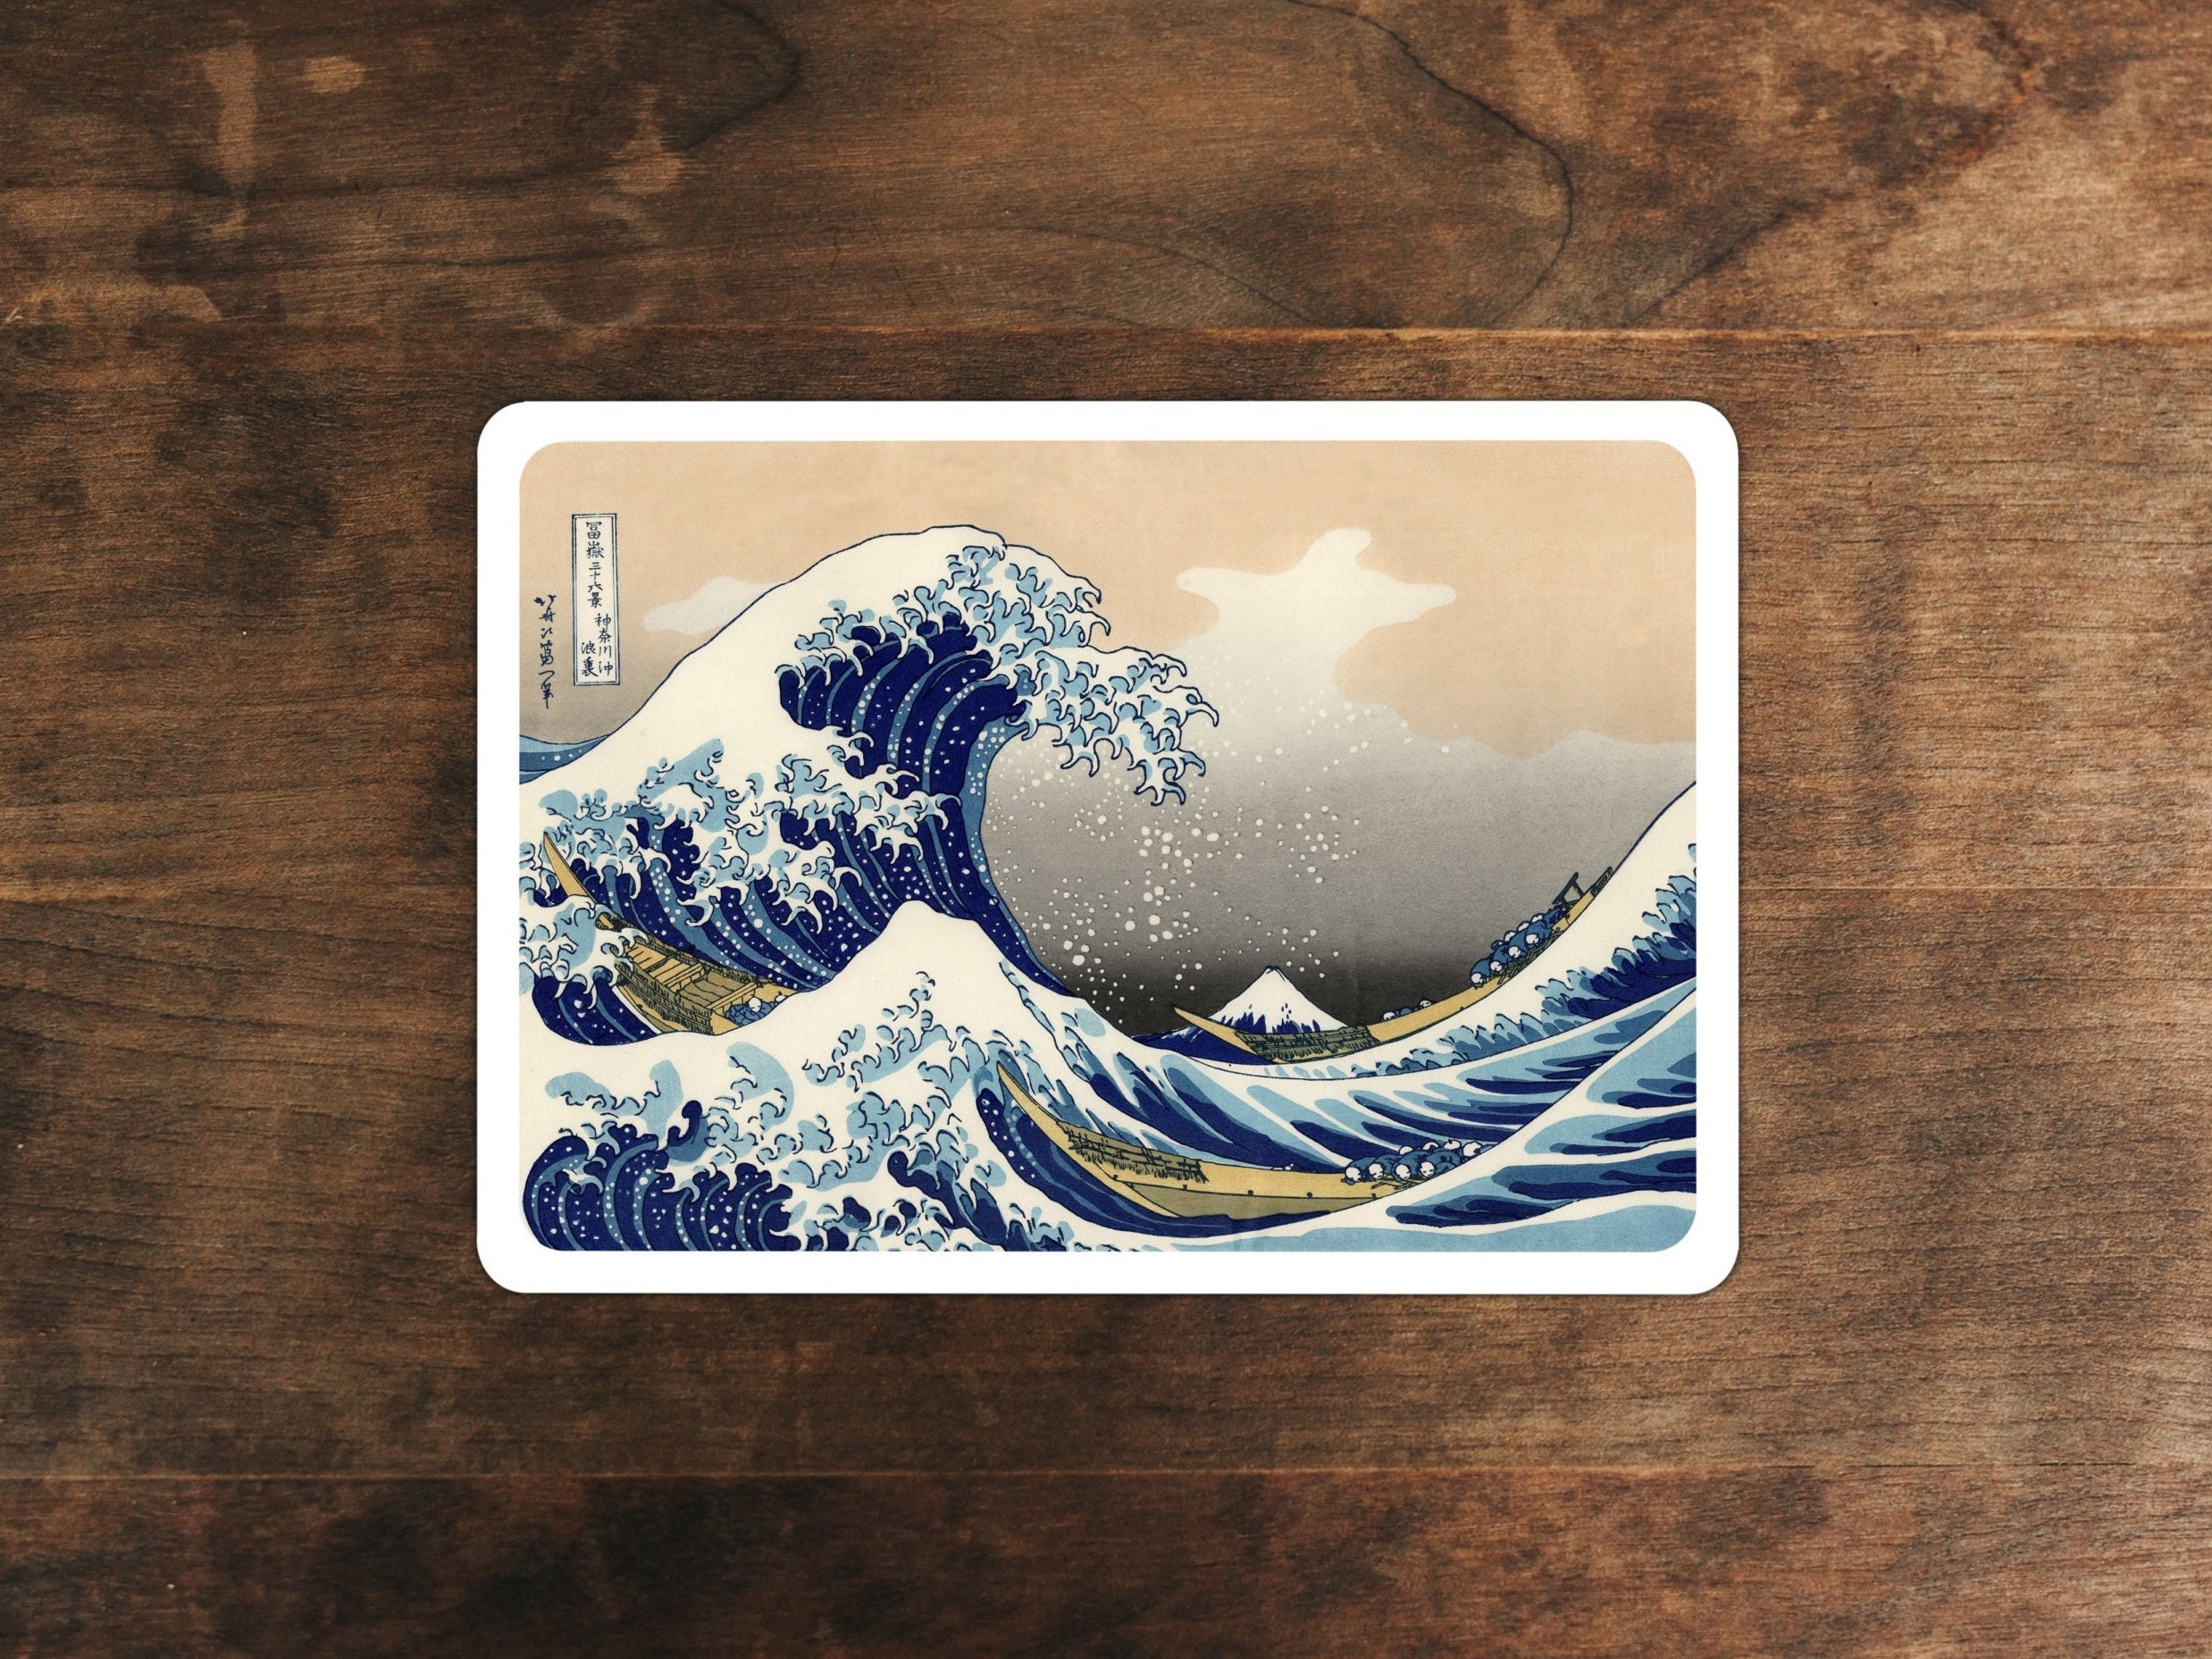  Godzilla Japanese Wave - 3 Vinyl Sticker - for Car Laptop Water  Bottle Phone - Waterproof Decal